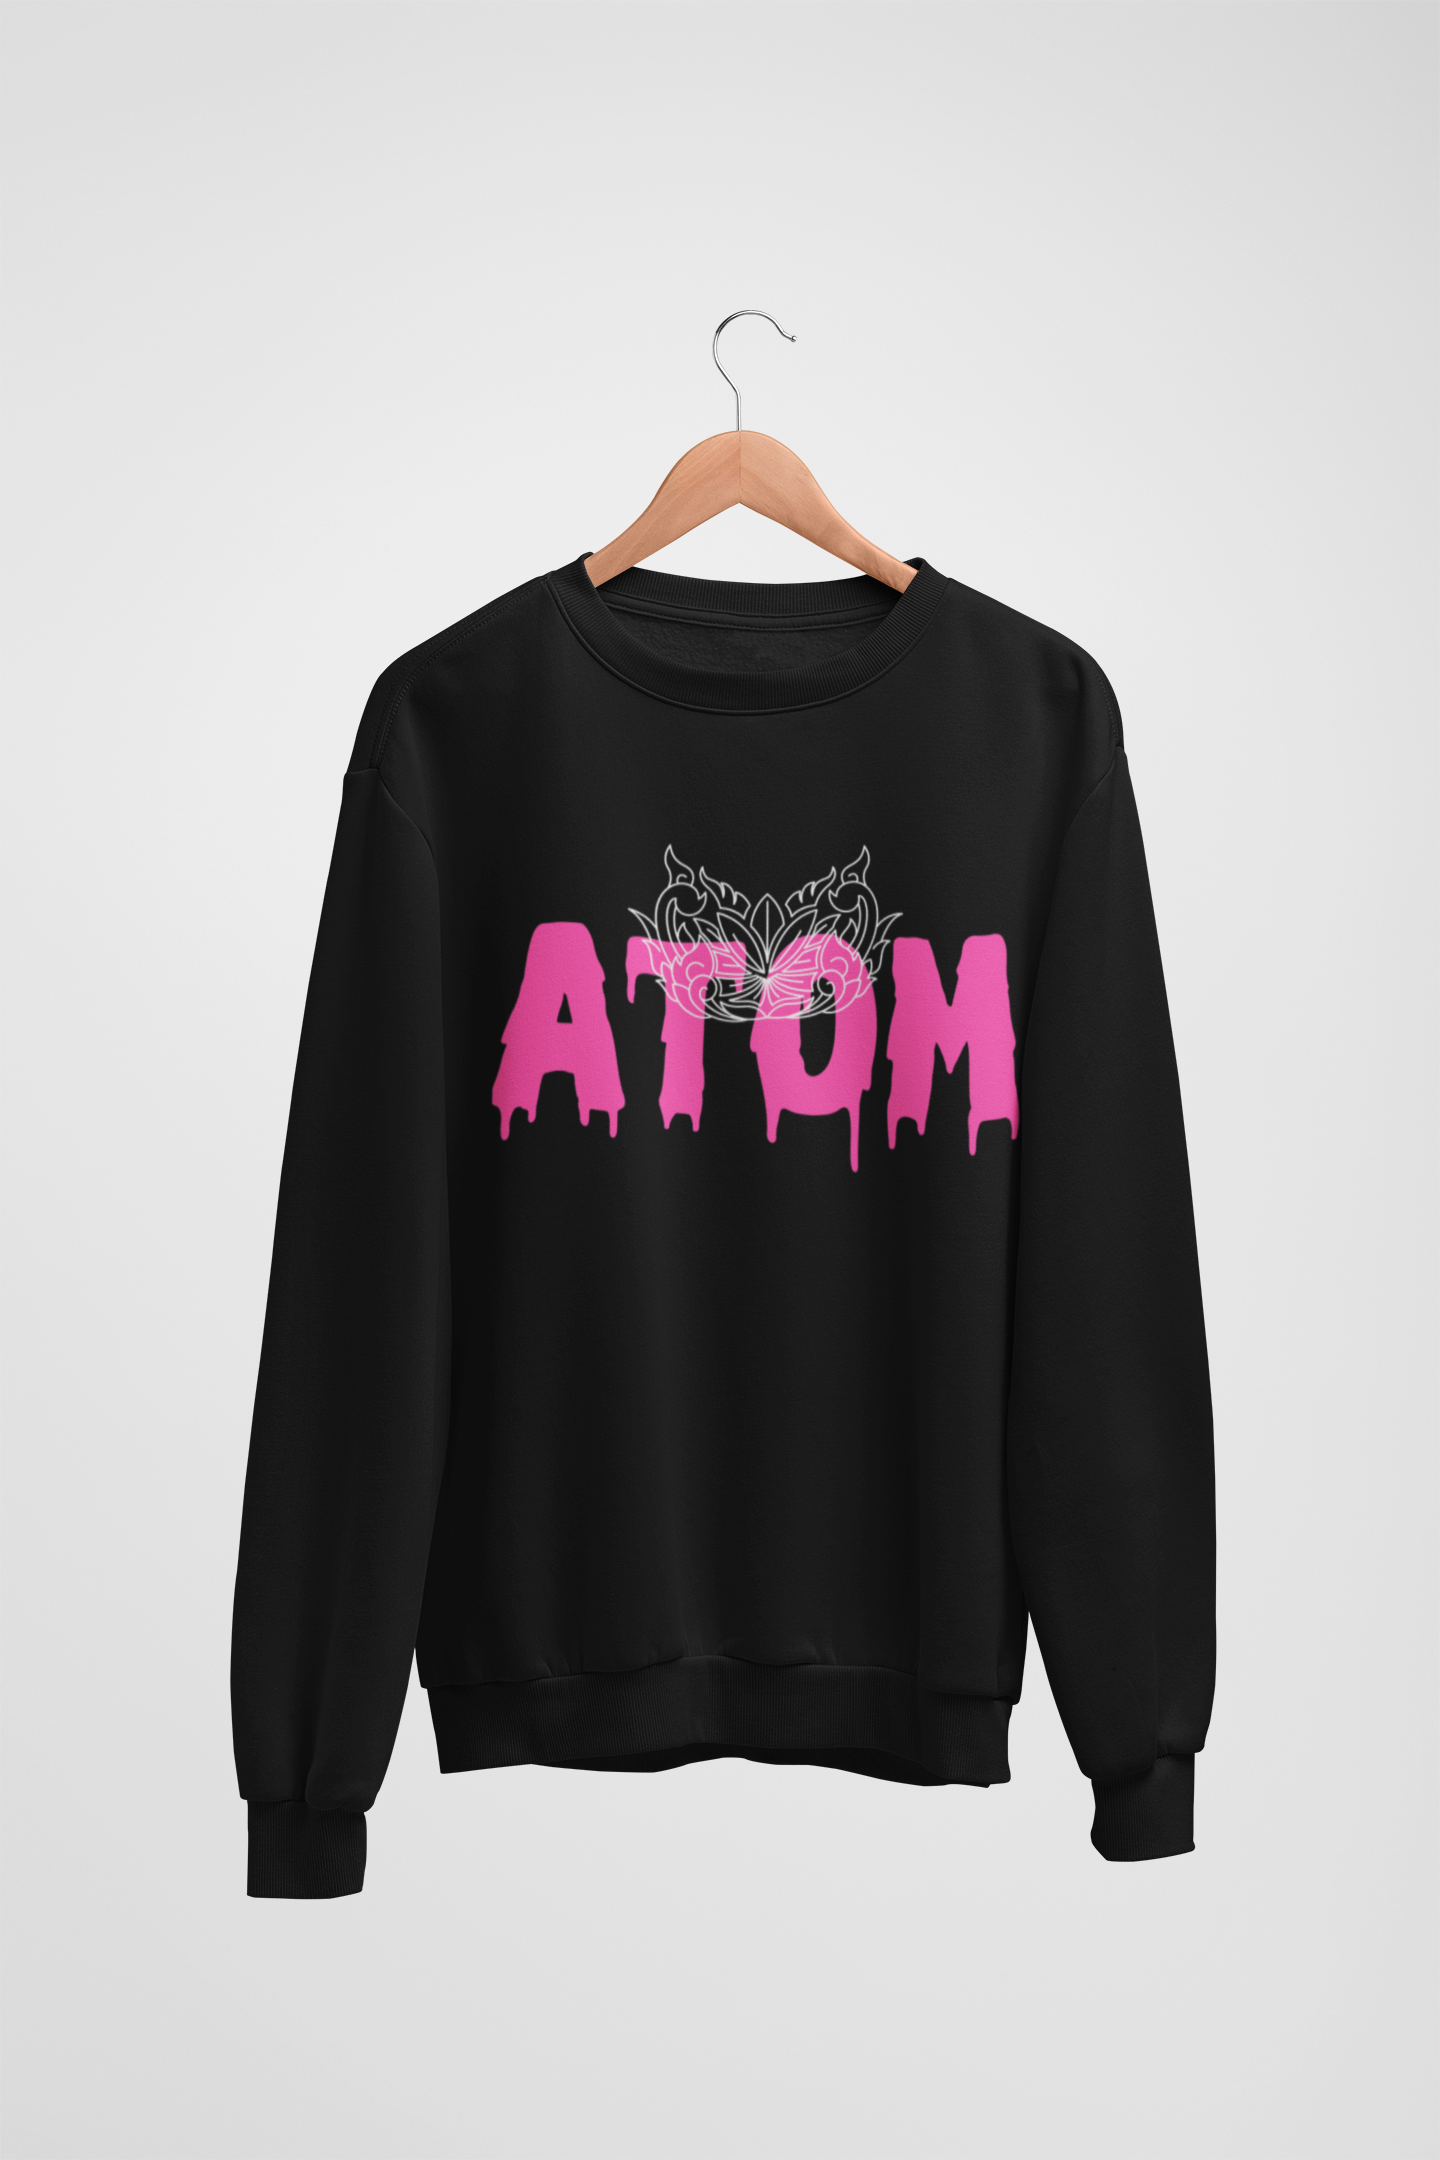 Bloody Pink ATOM Crew Neck Black Sweatshirt For Women